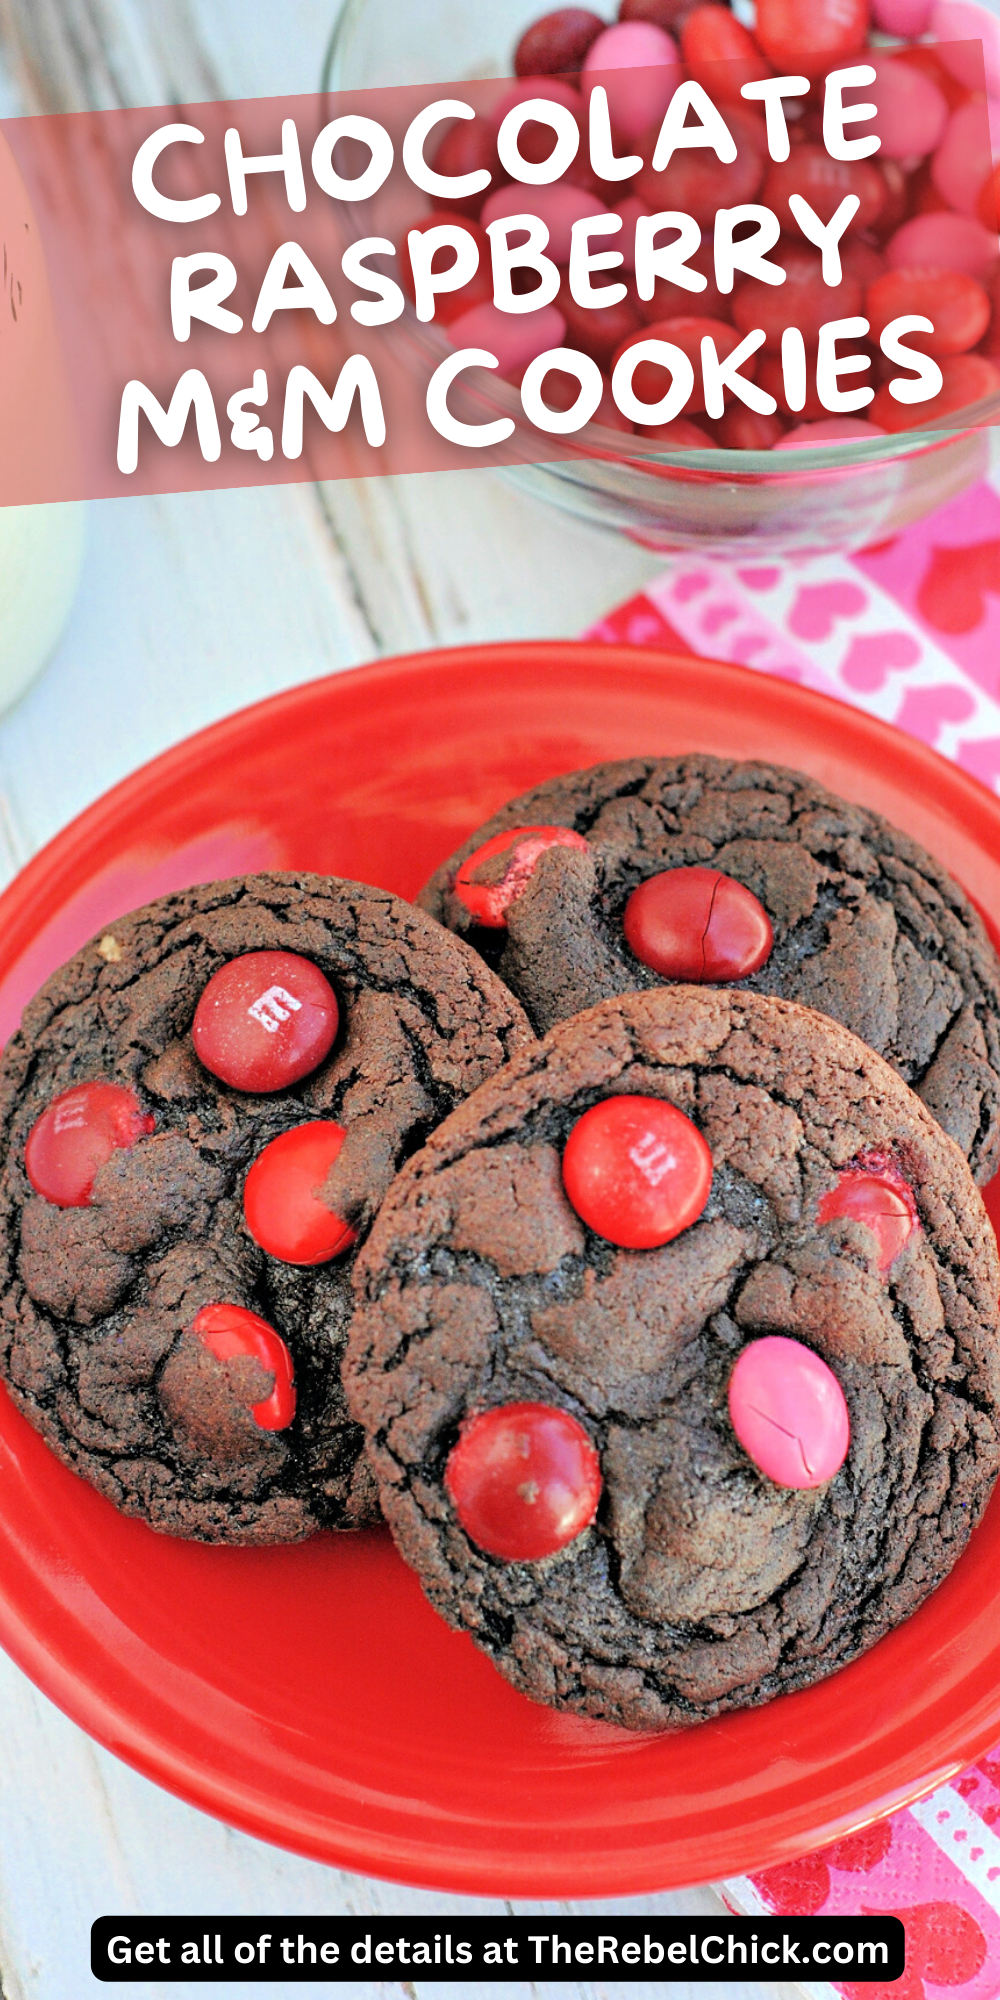 Chocolate Raspberry M&M Cookies recipe